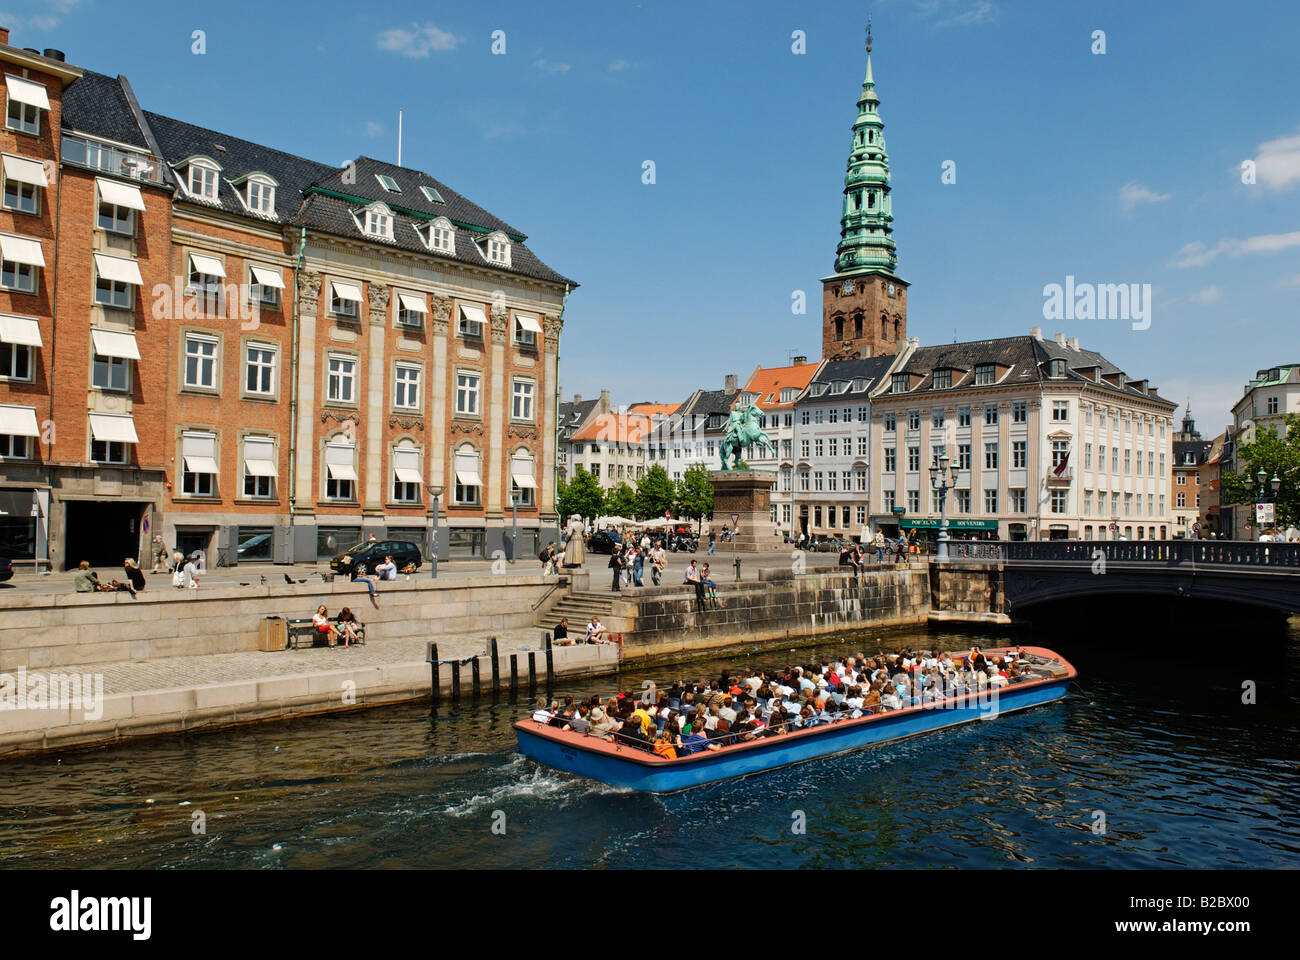 Gammle Hojbro Plads, Strand et Nikolaj Church, Copenhague, Danemark, Scandinavie, Europe Banque D'Images